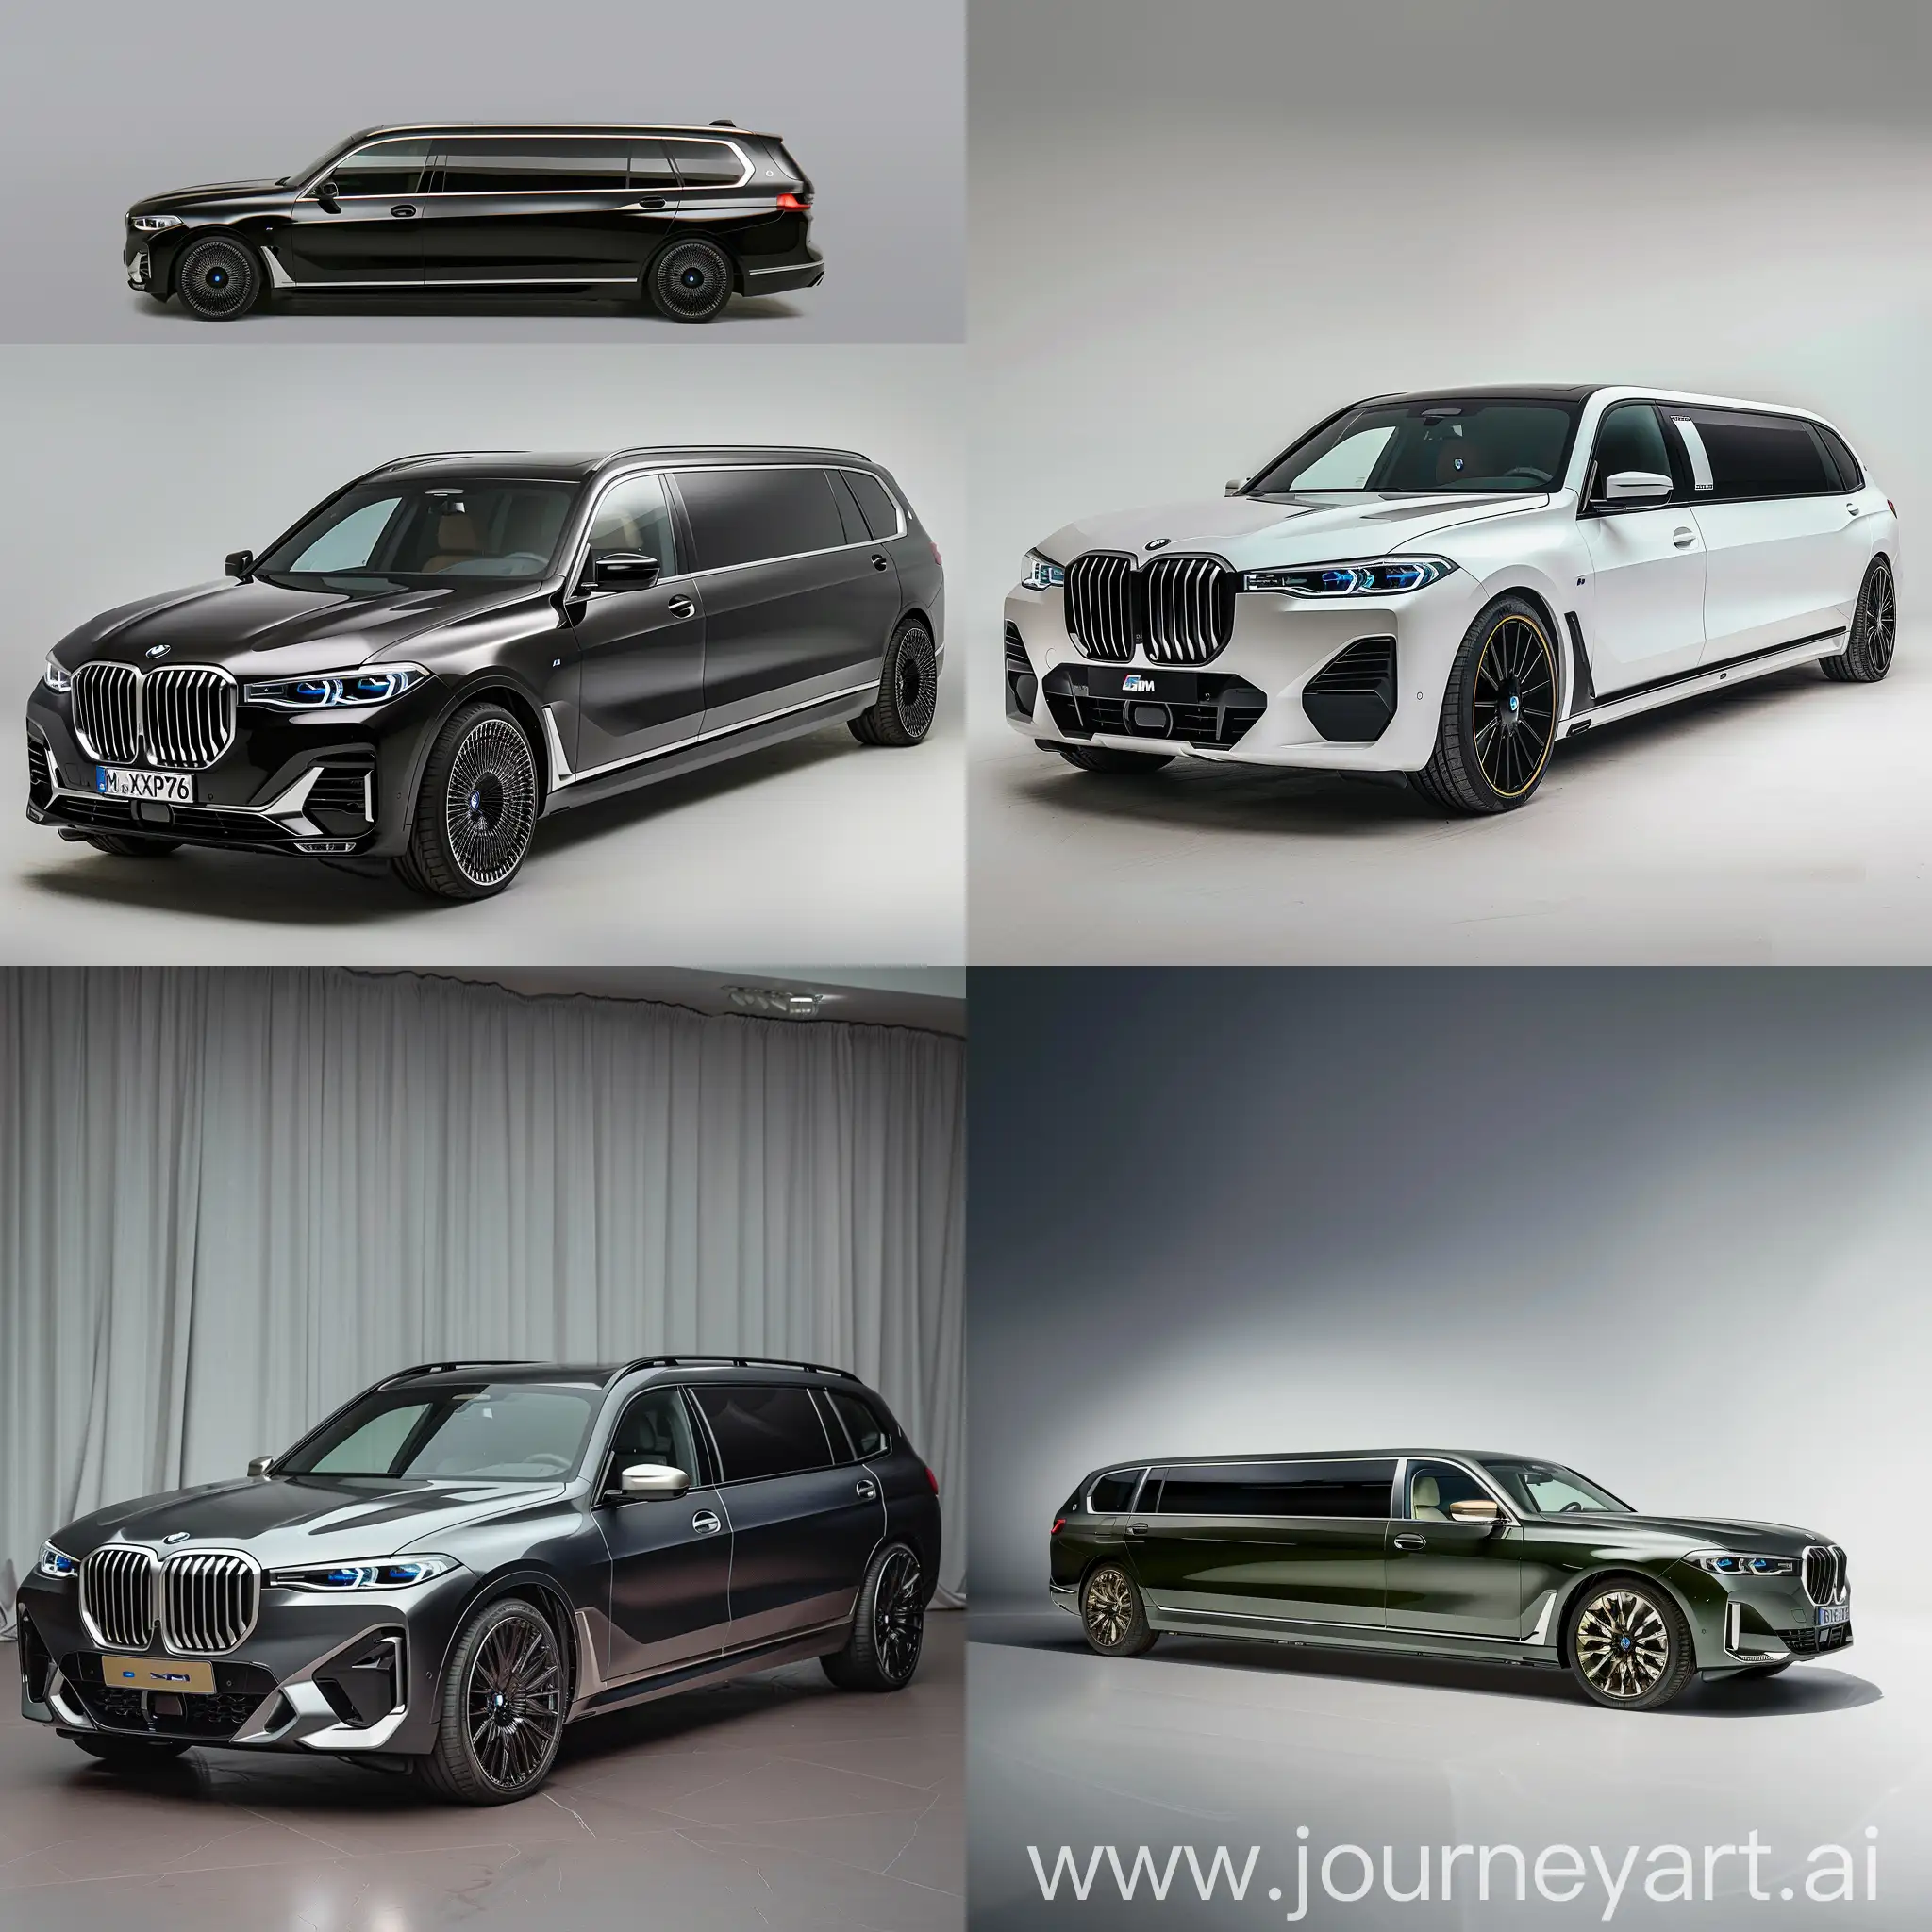 Luxurious-BMW-X6-M-Limousine-with-V6-Engine-Aspect-Ratio-11